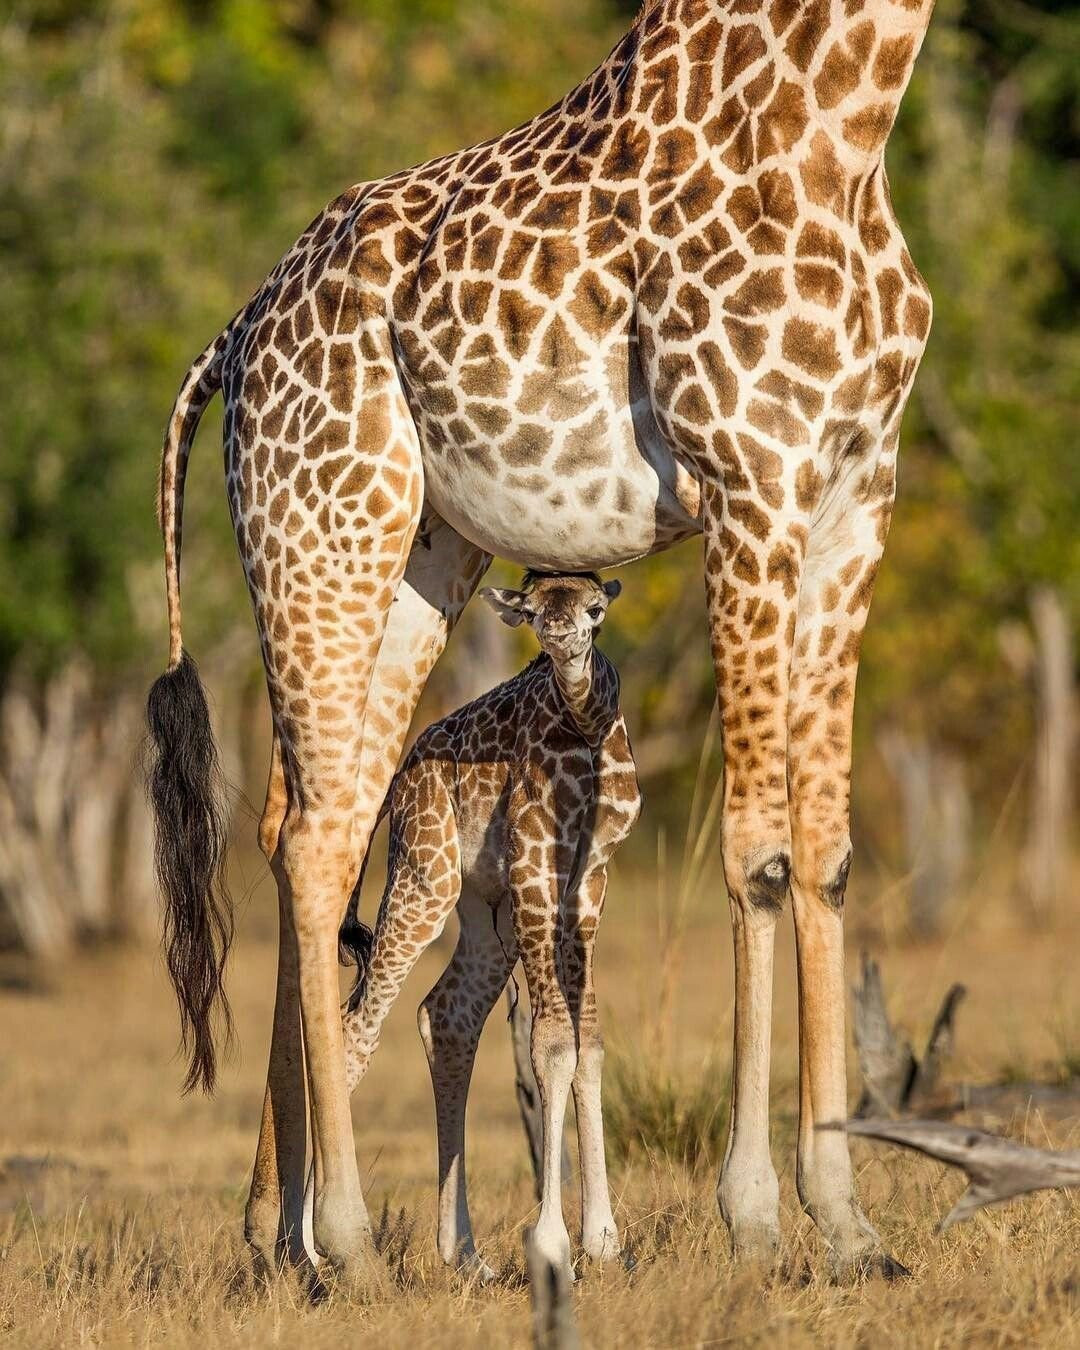 член у жирафа длина фото 107